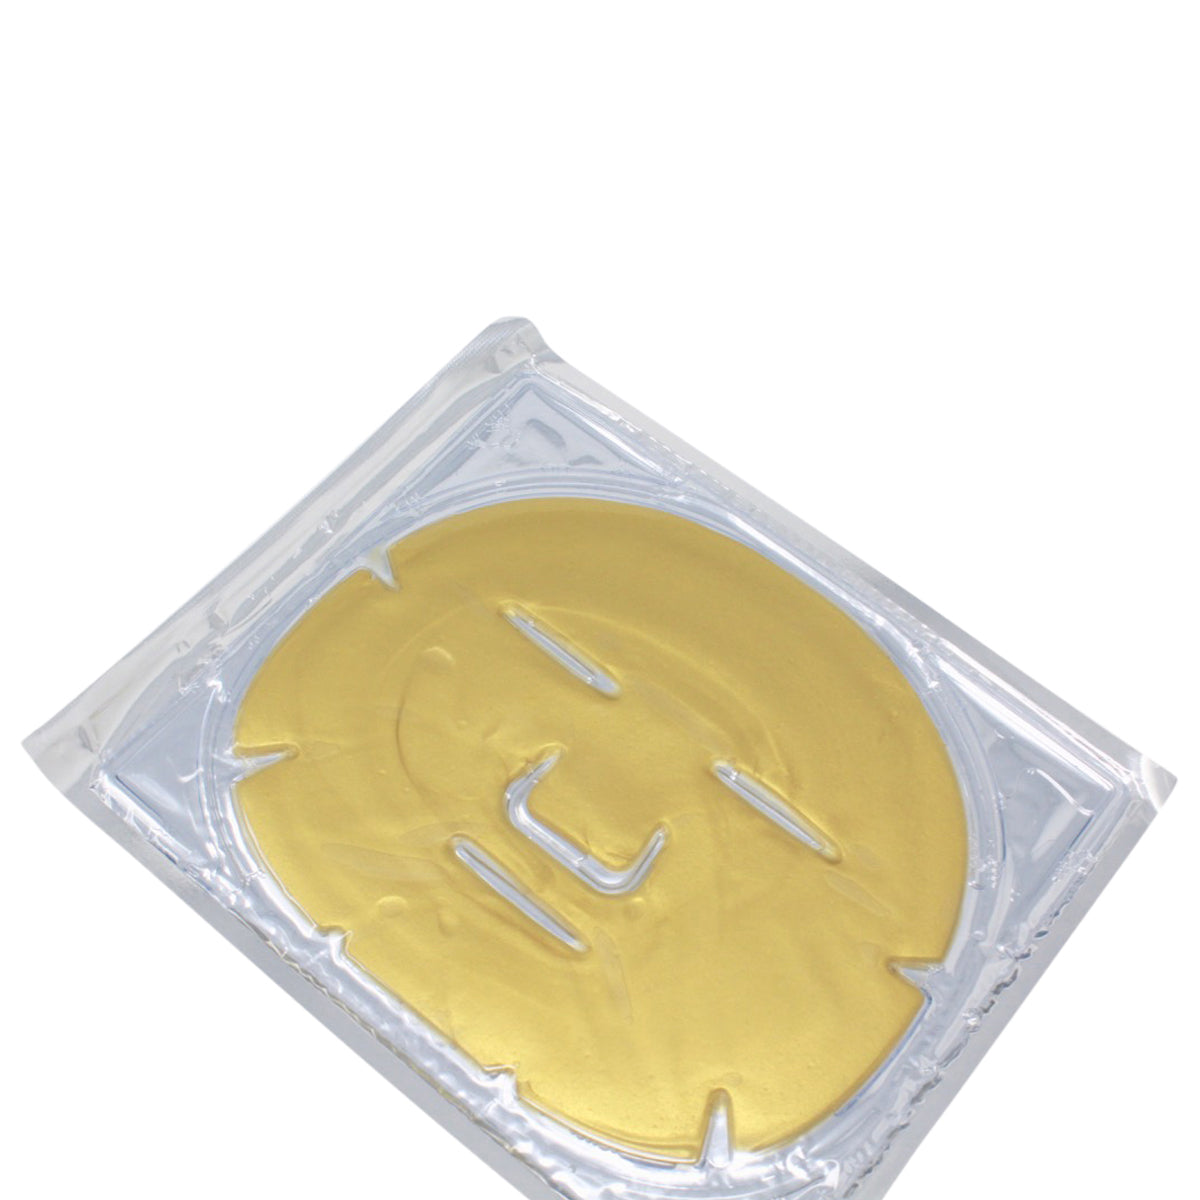 Pure Gold 24k Anti-Aging Facial Sheet Mask